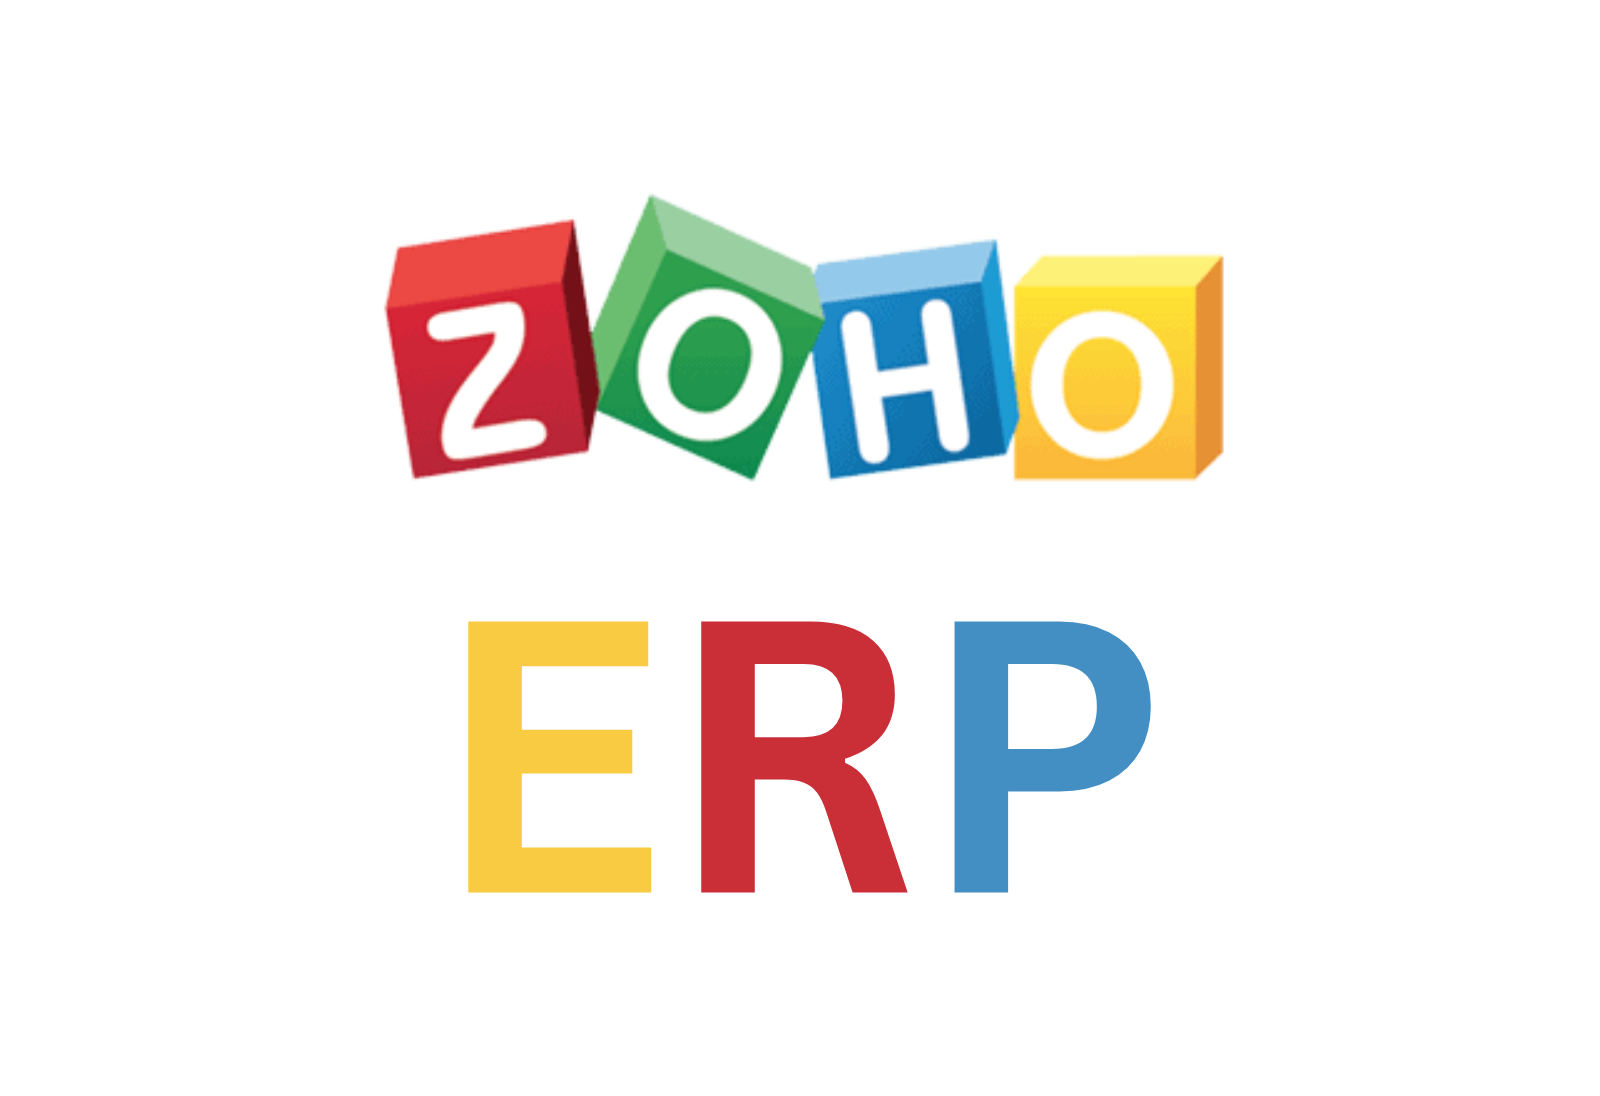 Zoho ERP